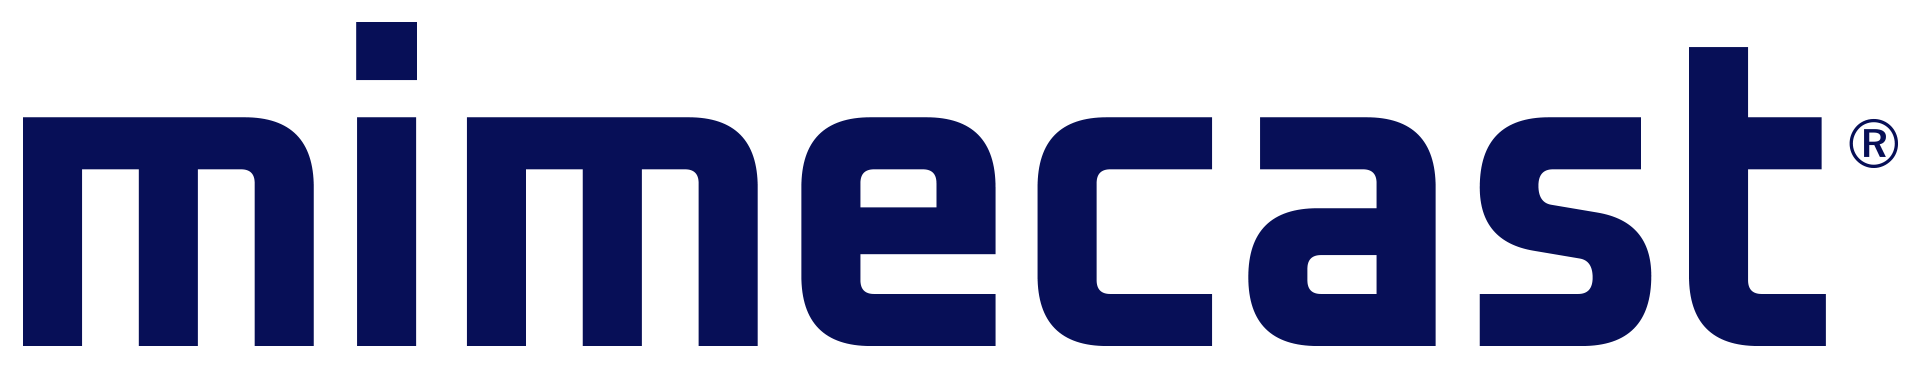 Mimecast North America, Inc. logo